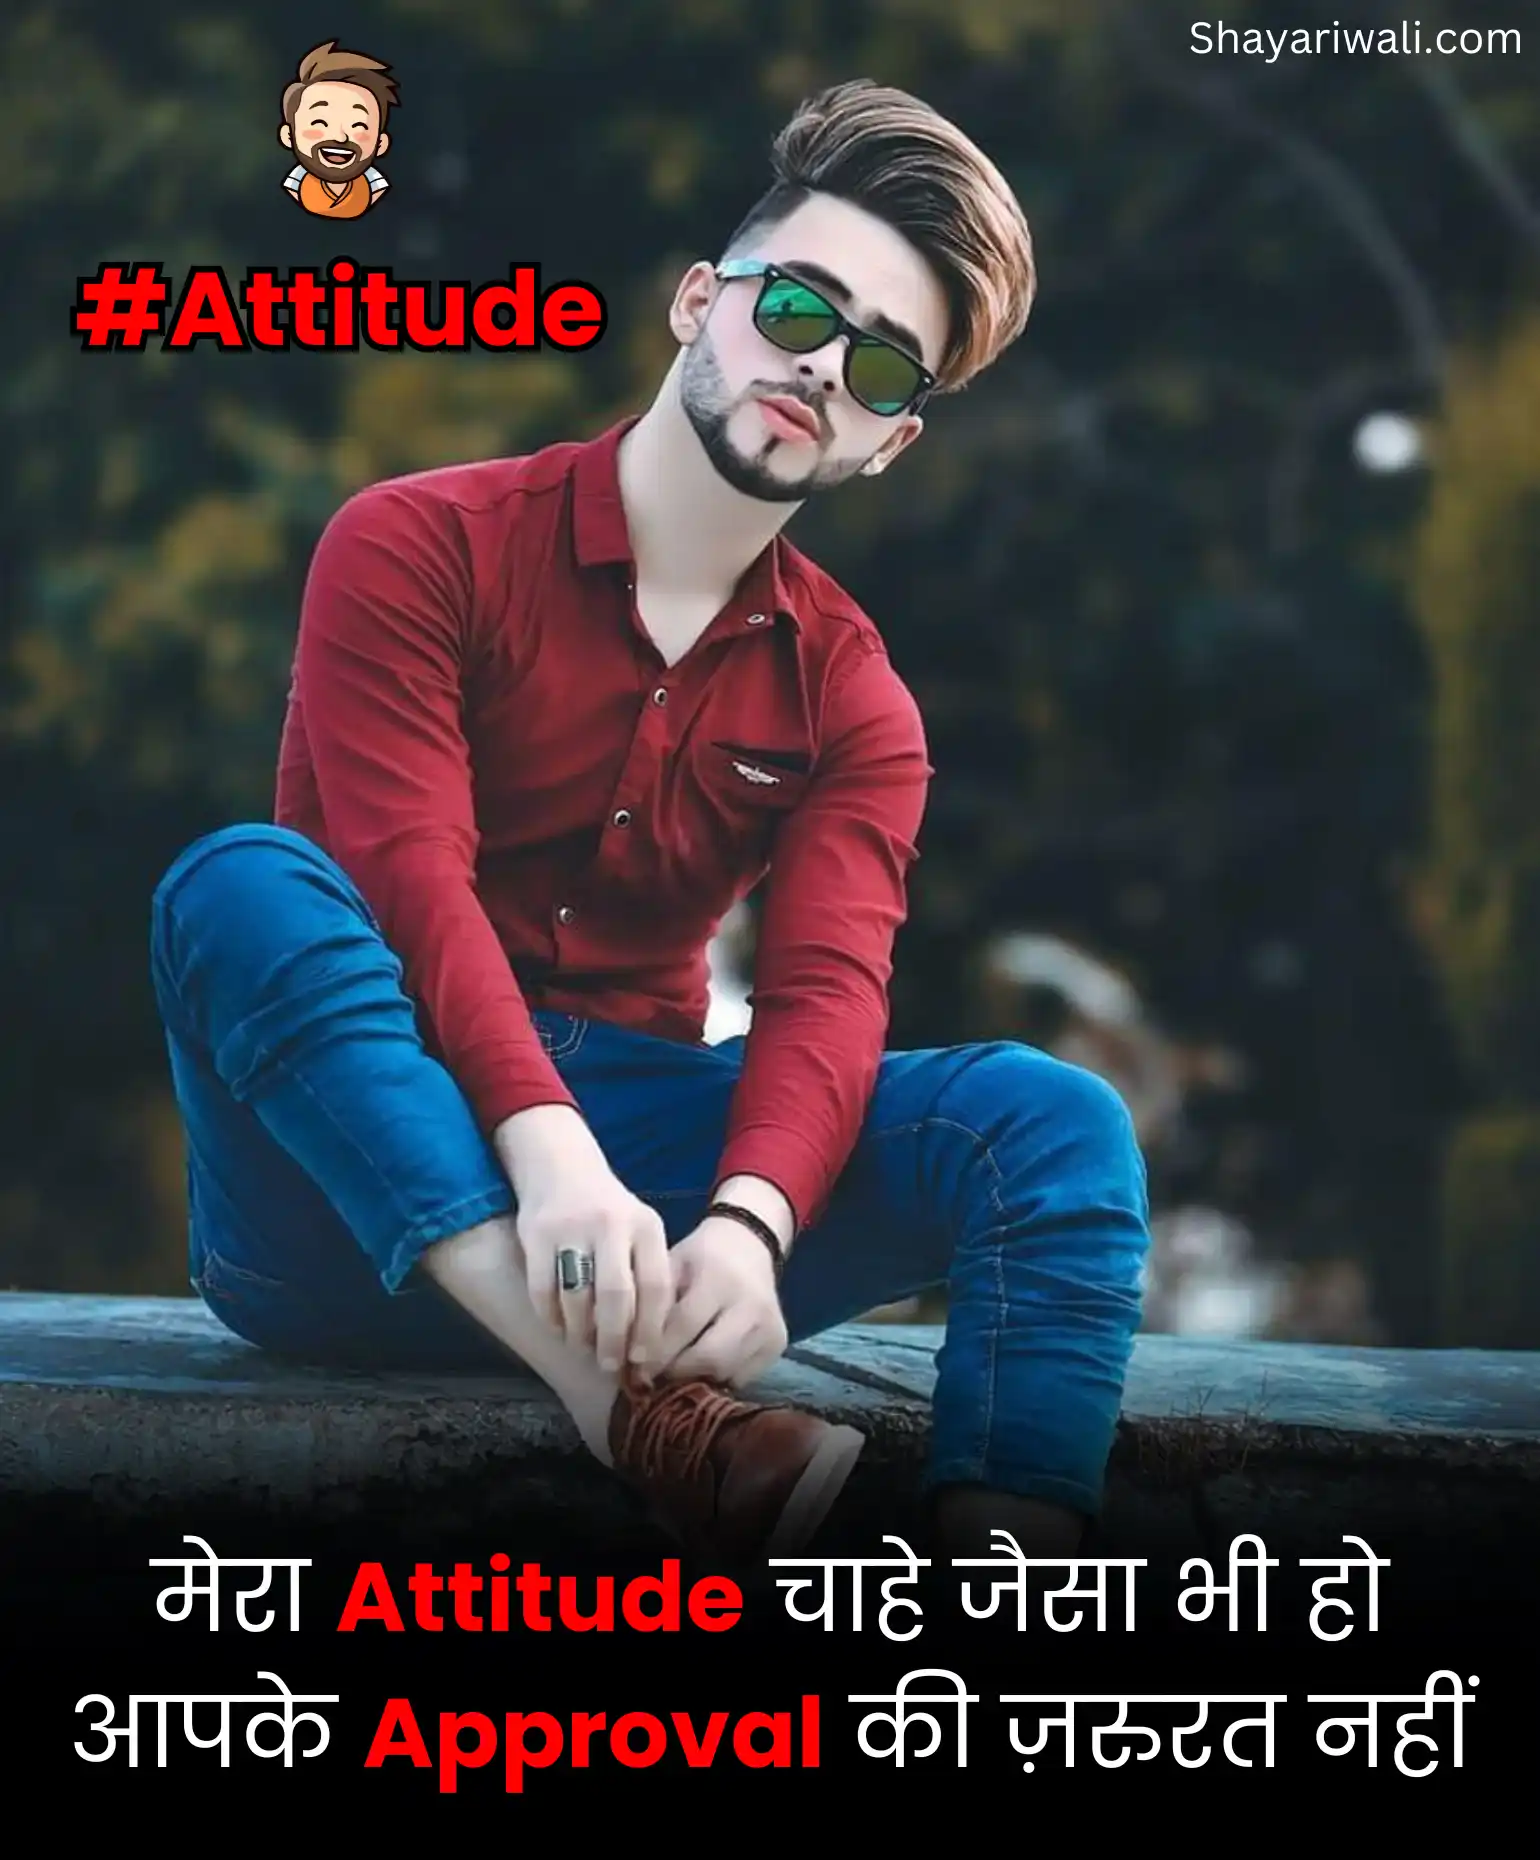 2 Line Attitude Shayariwali.com